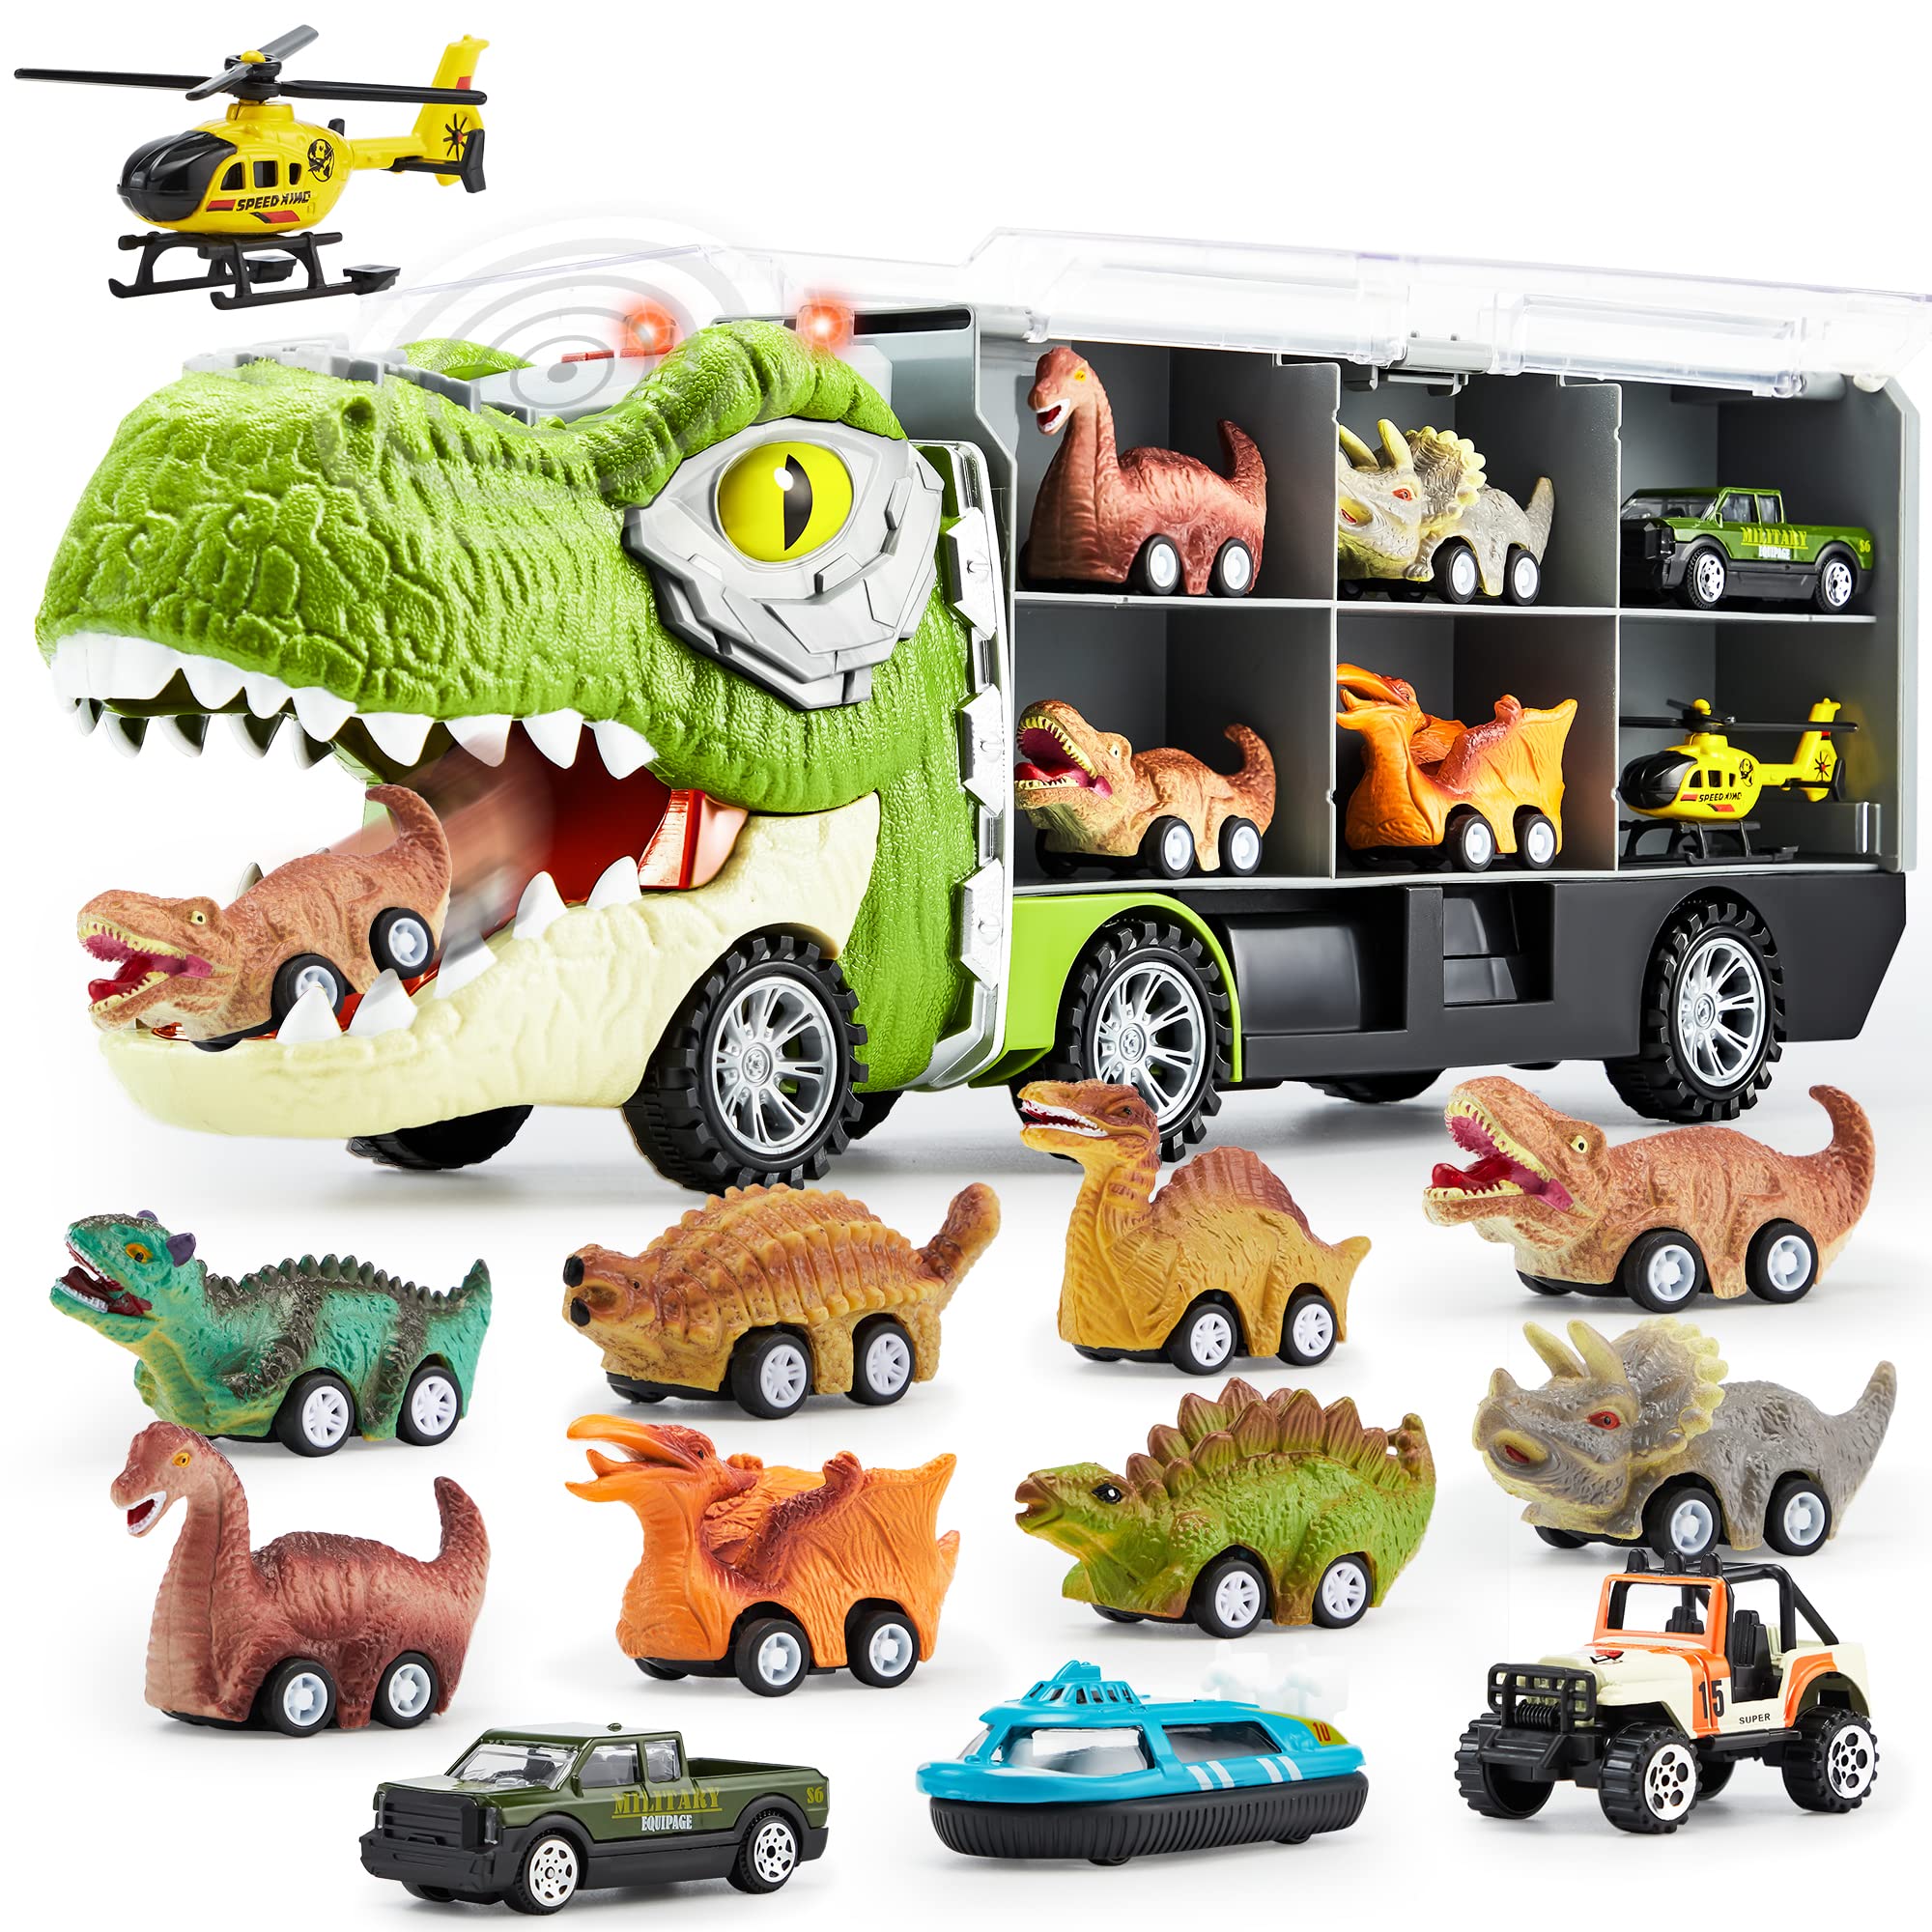 Montessori Toddler Toys: Dino Go Kart Truck Small Plastic, Christmas Gift  For Kids From Xsdhpw, $17.02